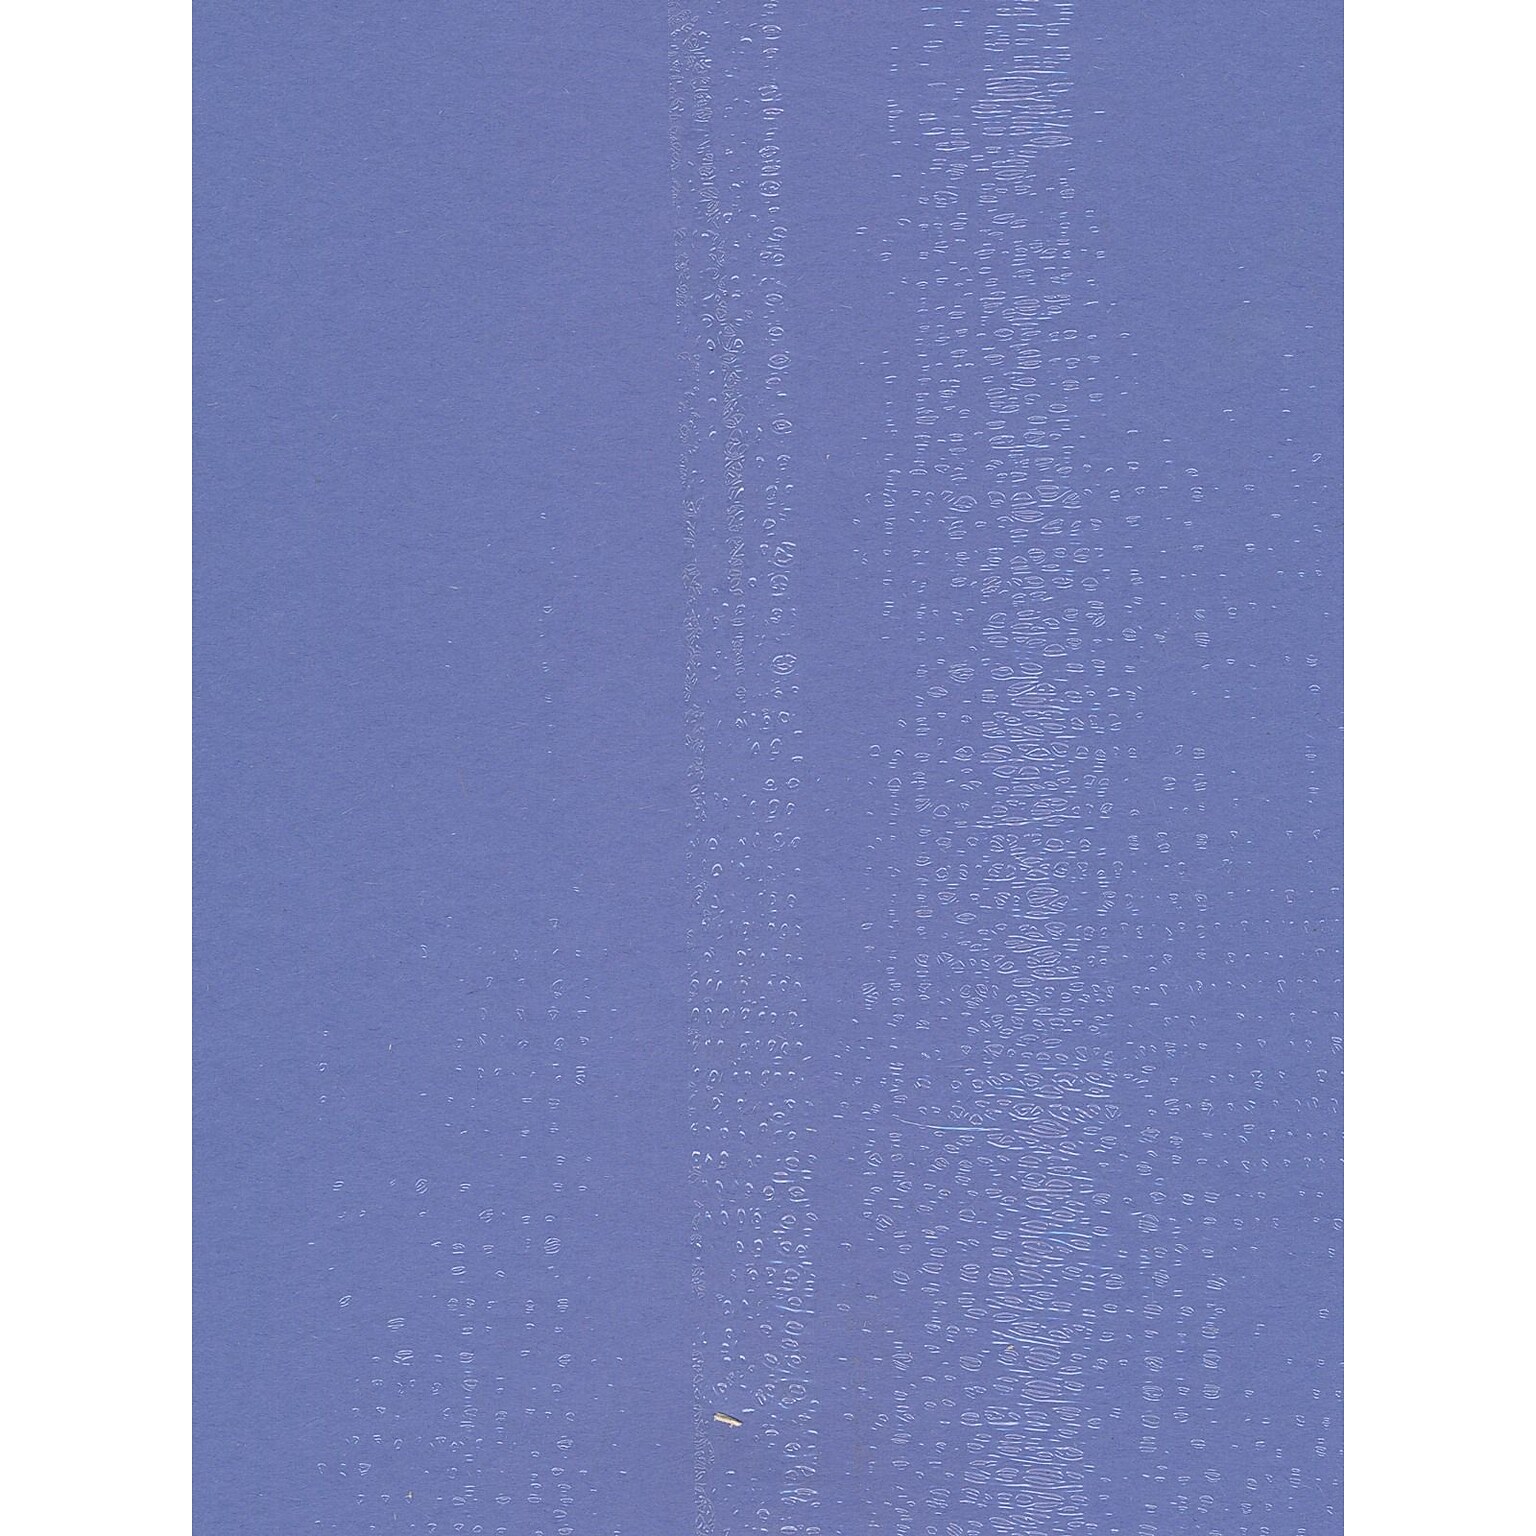 Pacon Sunworks Construction Paper Blue 12 x 18, 50 Sheets, 5/Pack  (5PK-7407)